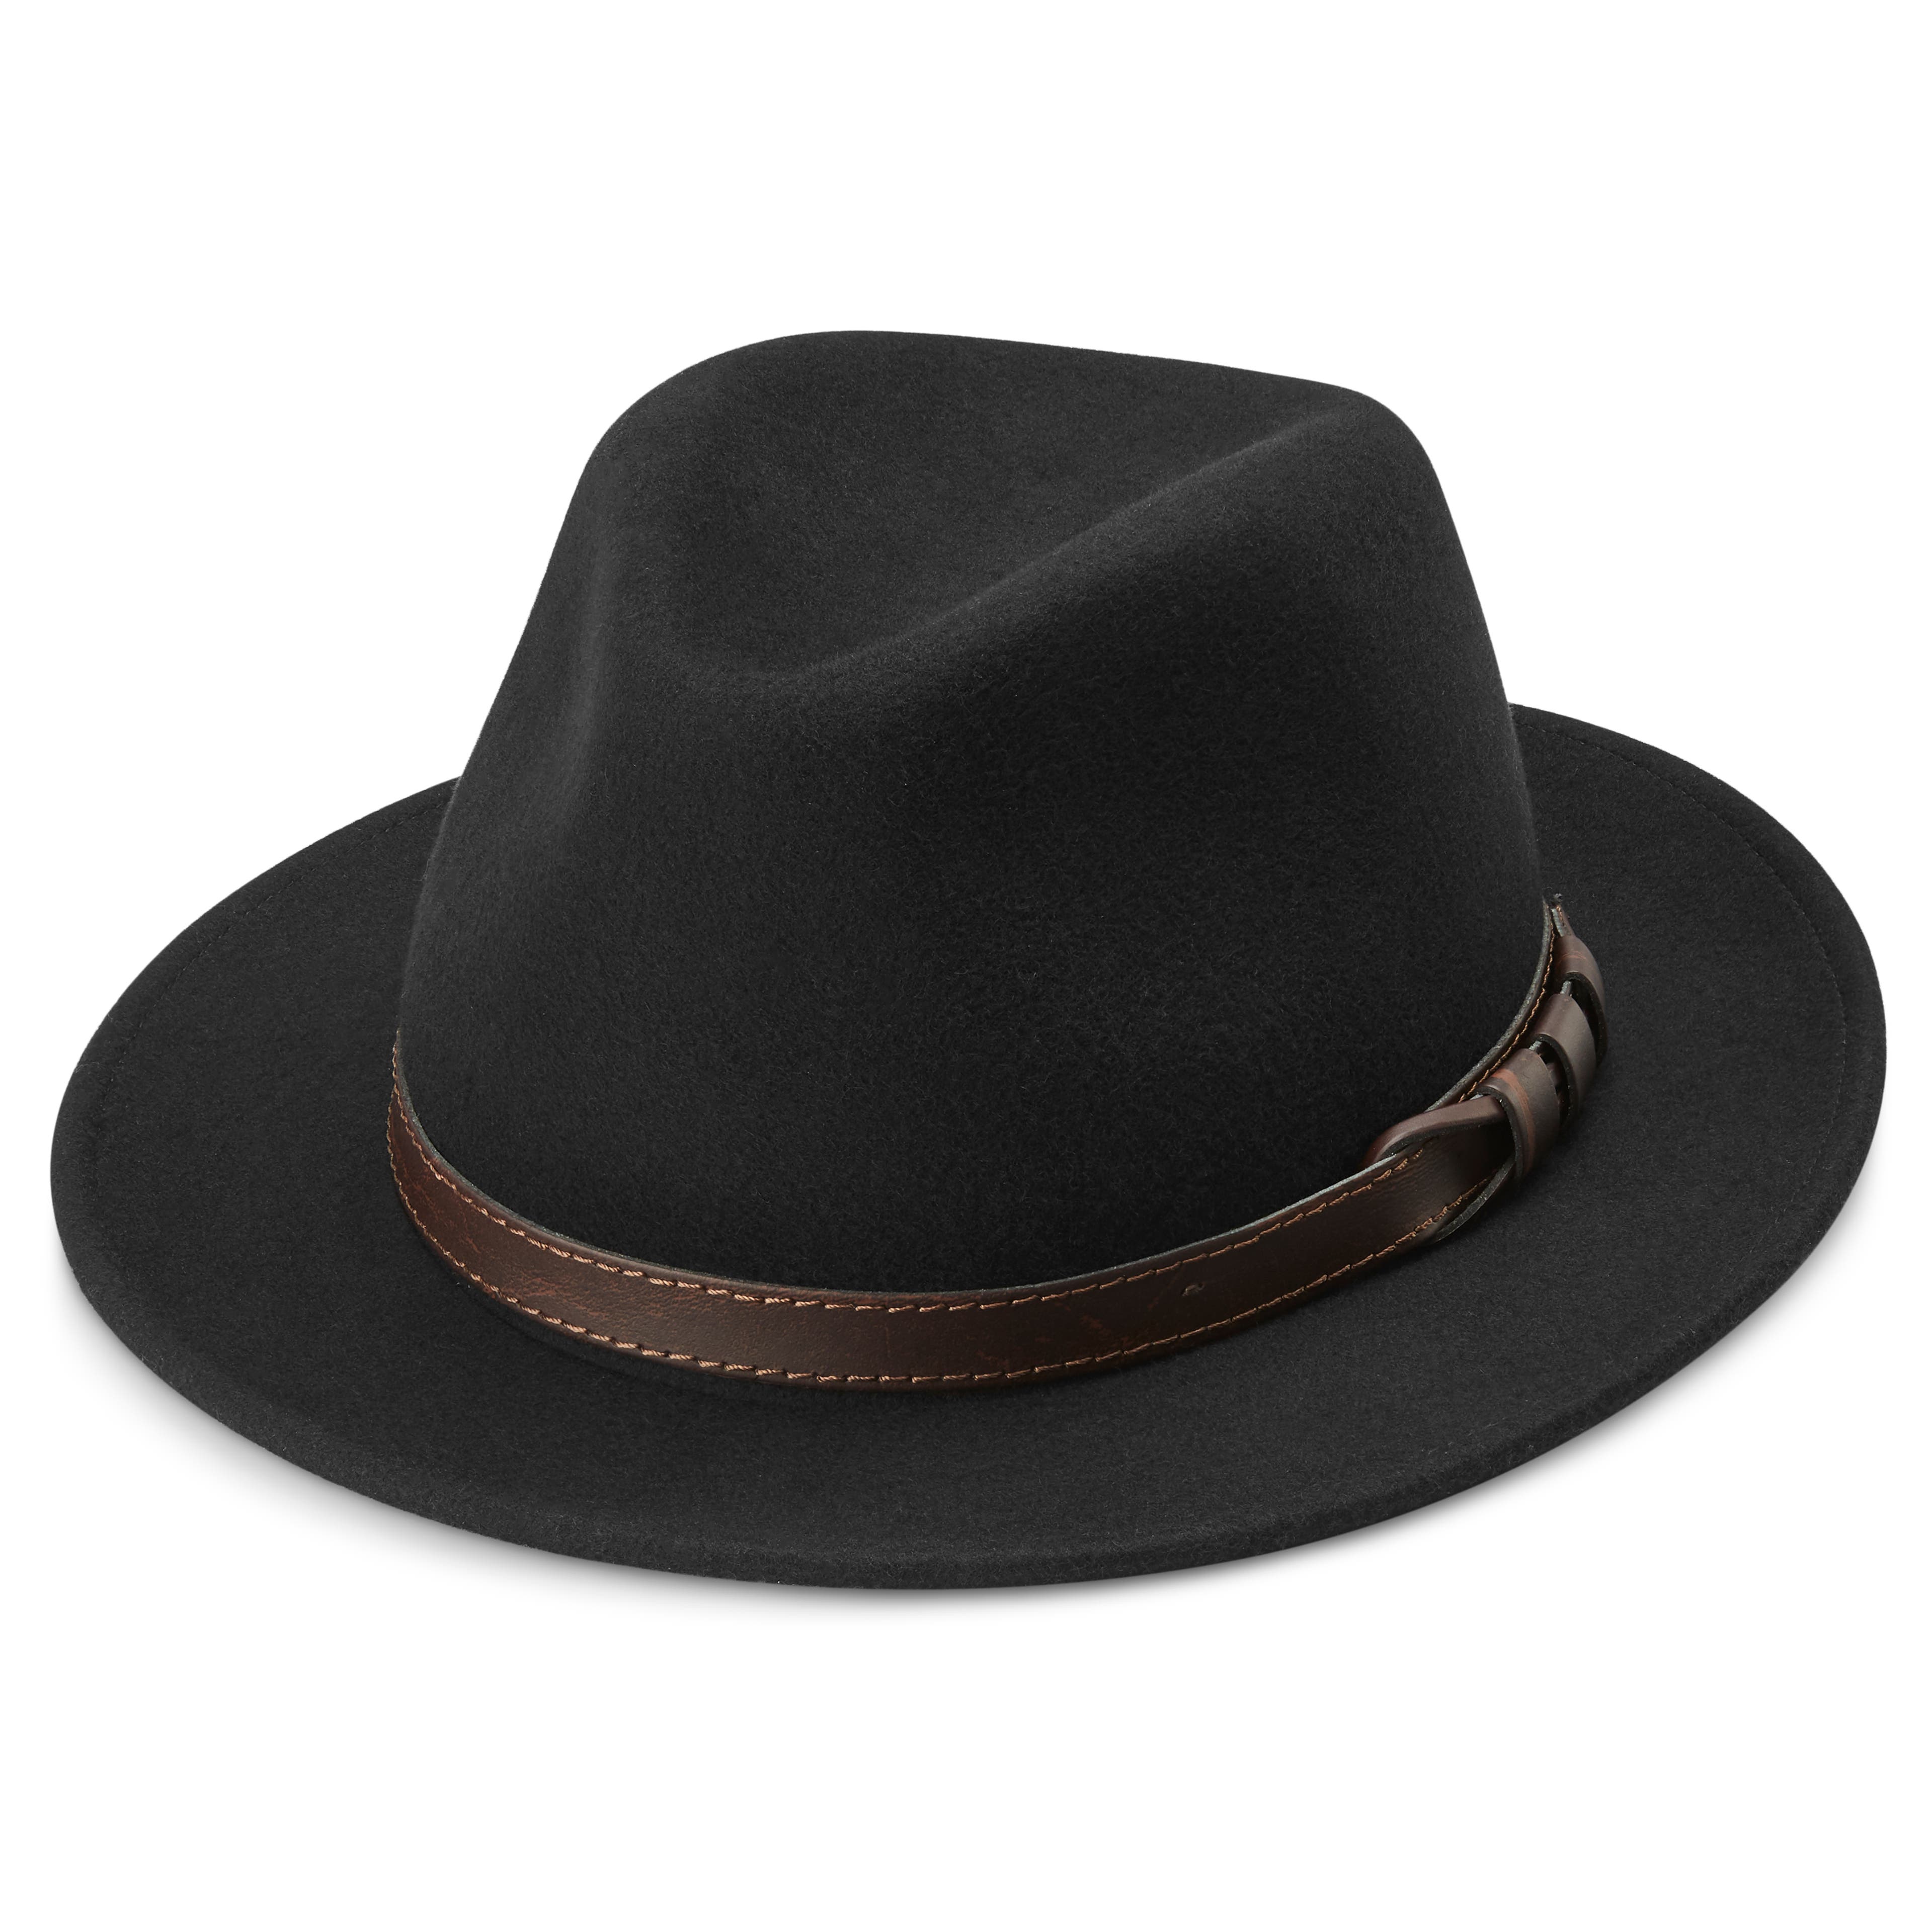 Flavio černý klobouk Moda Fedora s plochou krempou